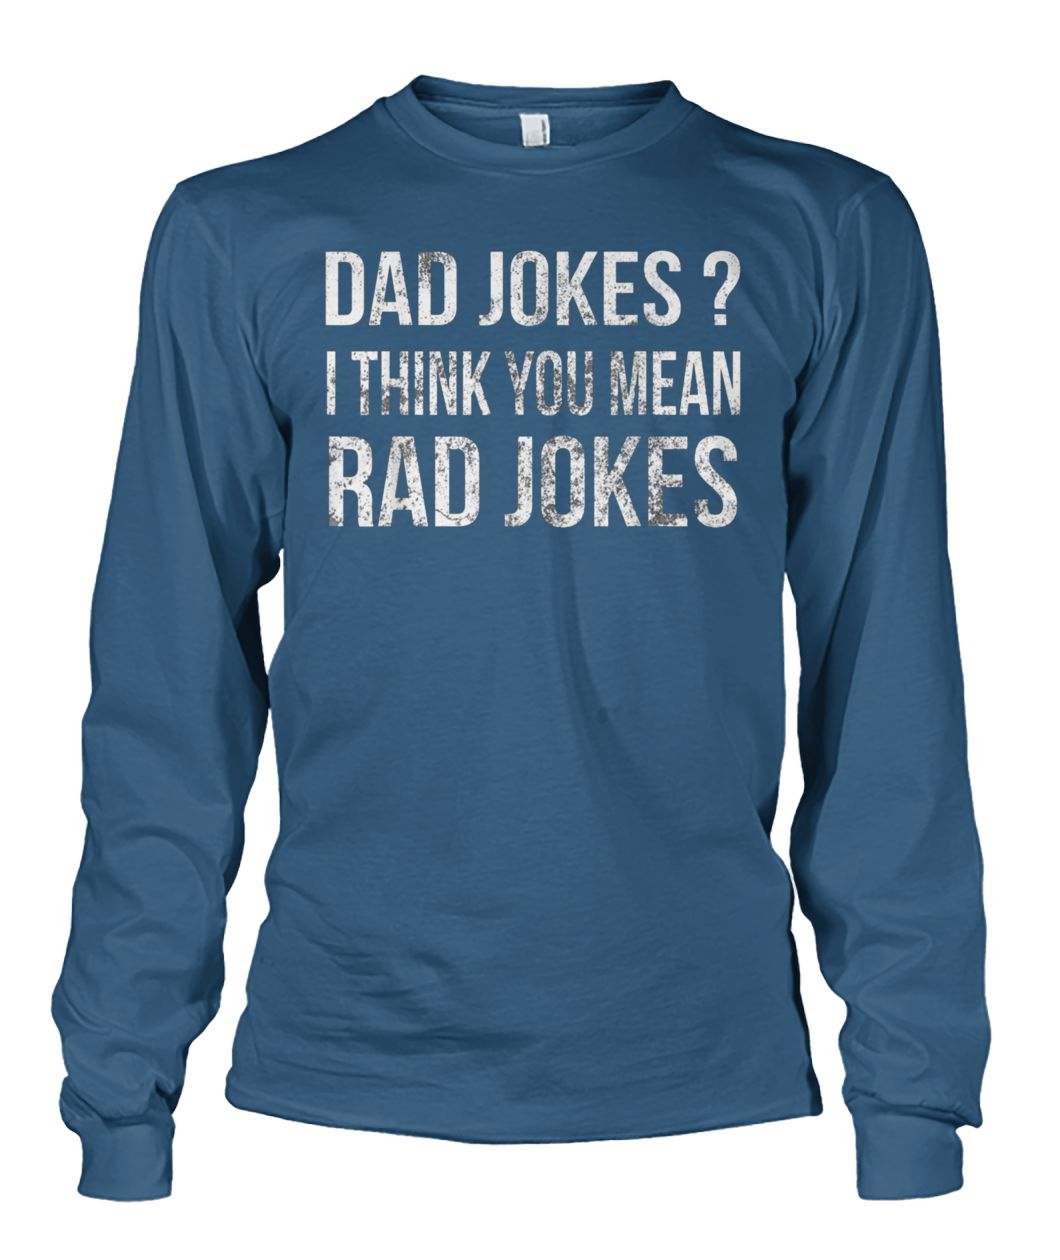 Dad jokes I think you mean rad jokes unisex long sleeve